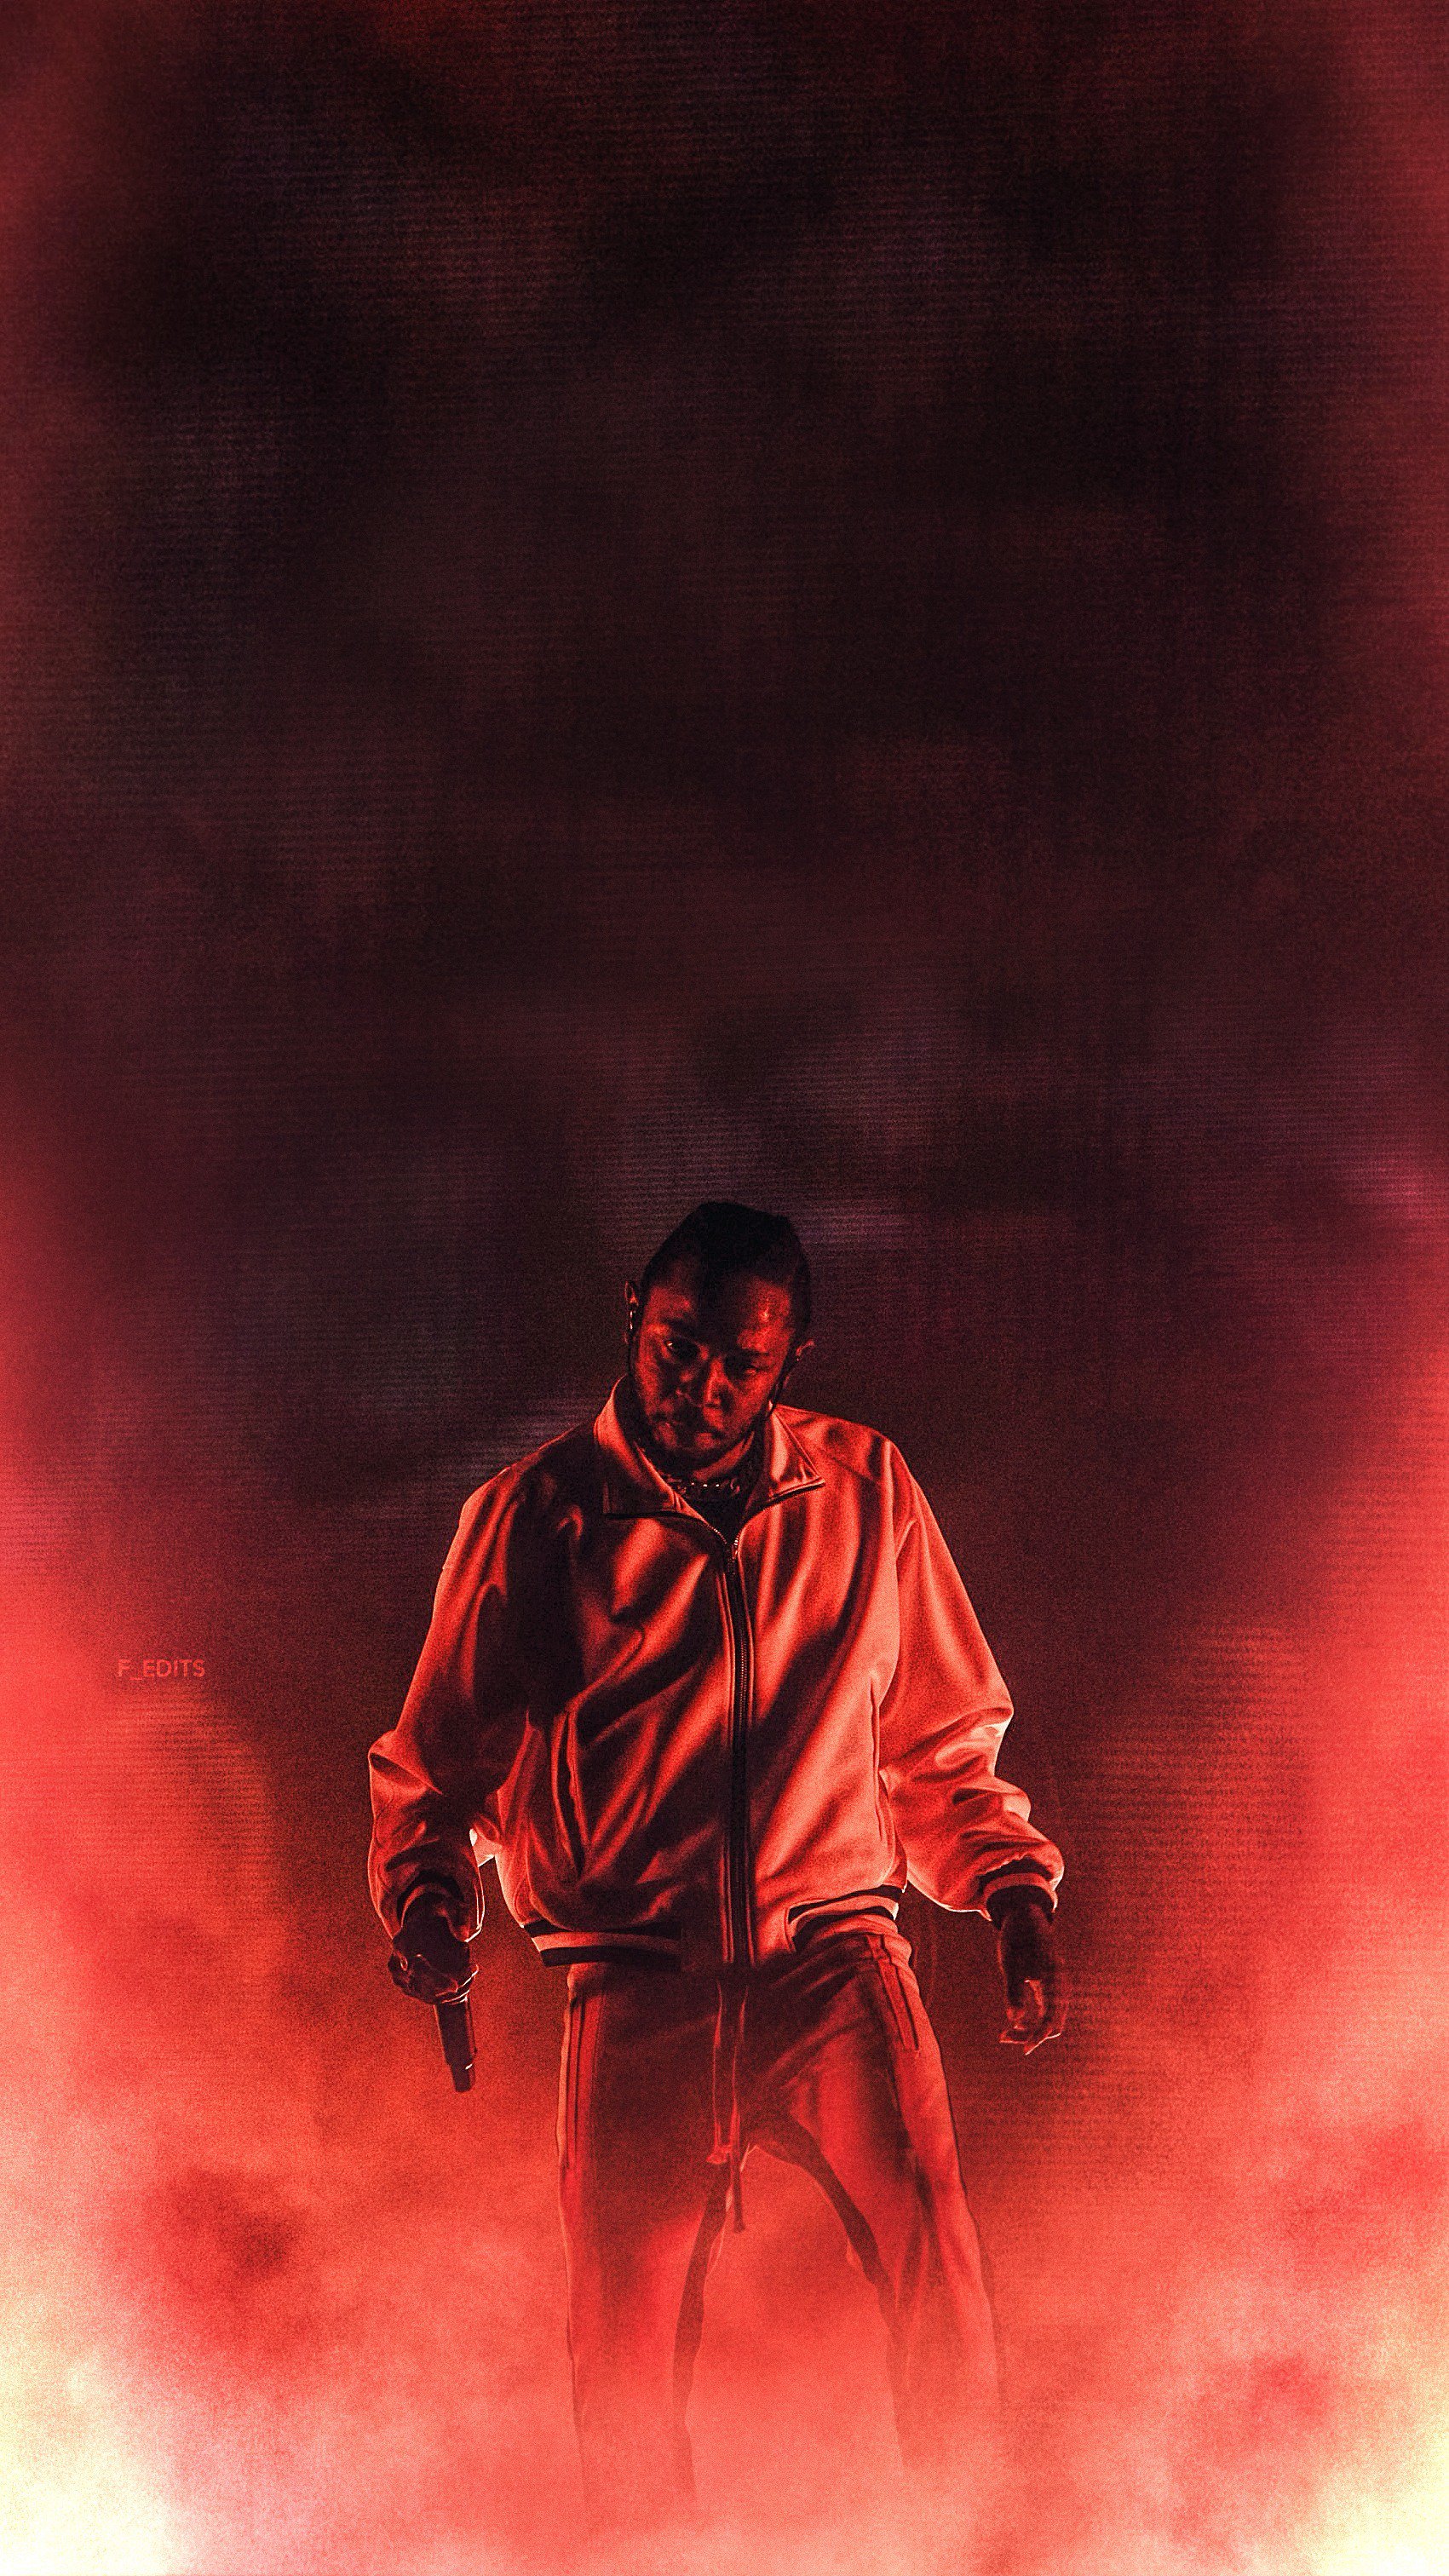 Fredrik - Kendrick Lamar wallpaper